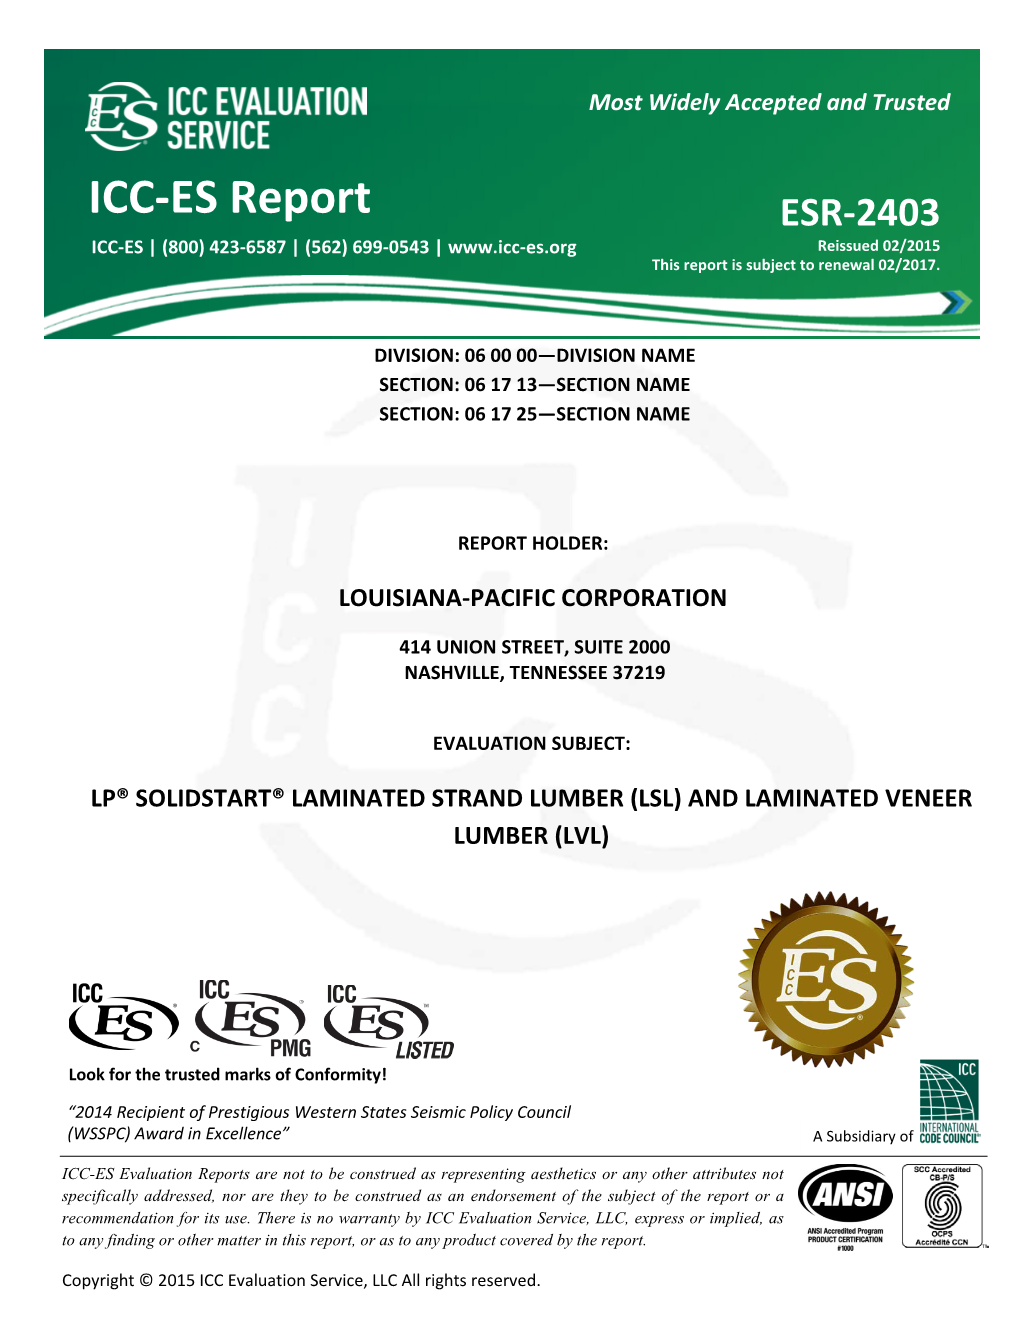 Icc-Es-Esr-2403-Lsl-Lvl-English.Pdf